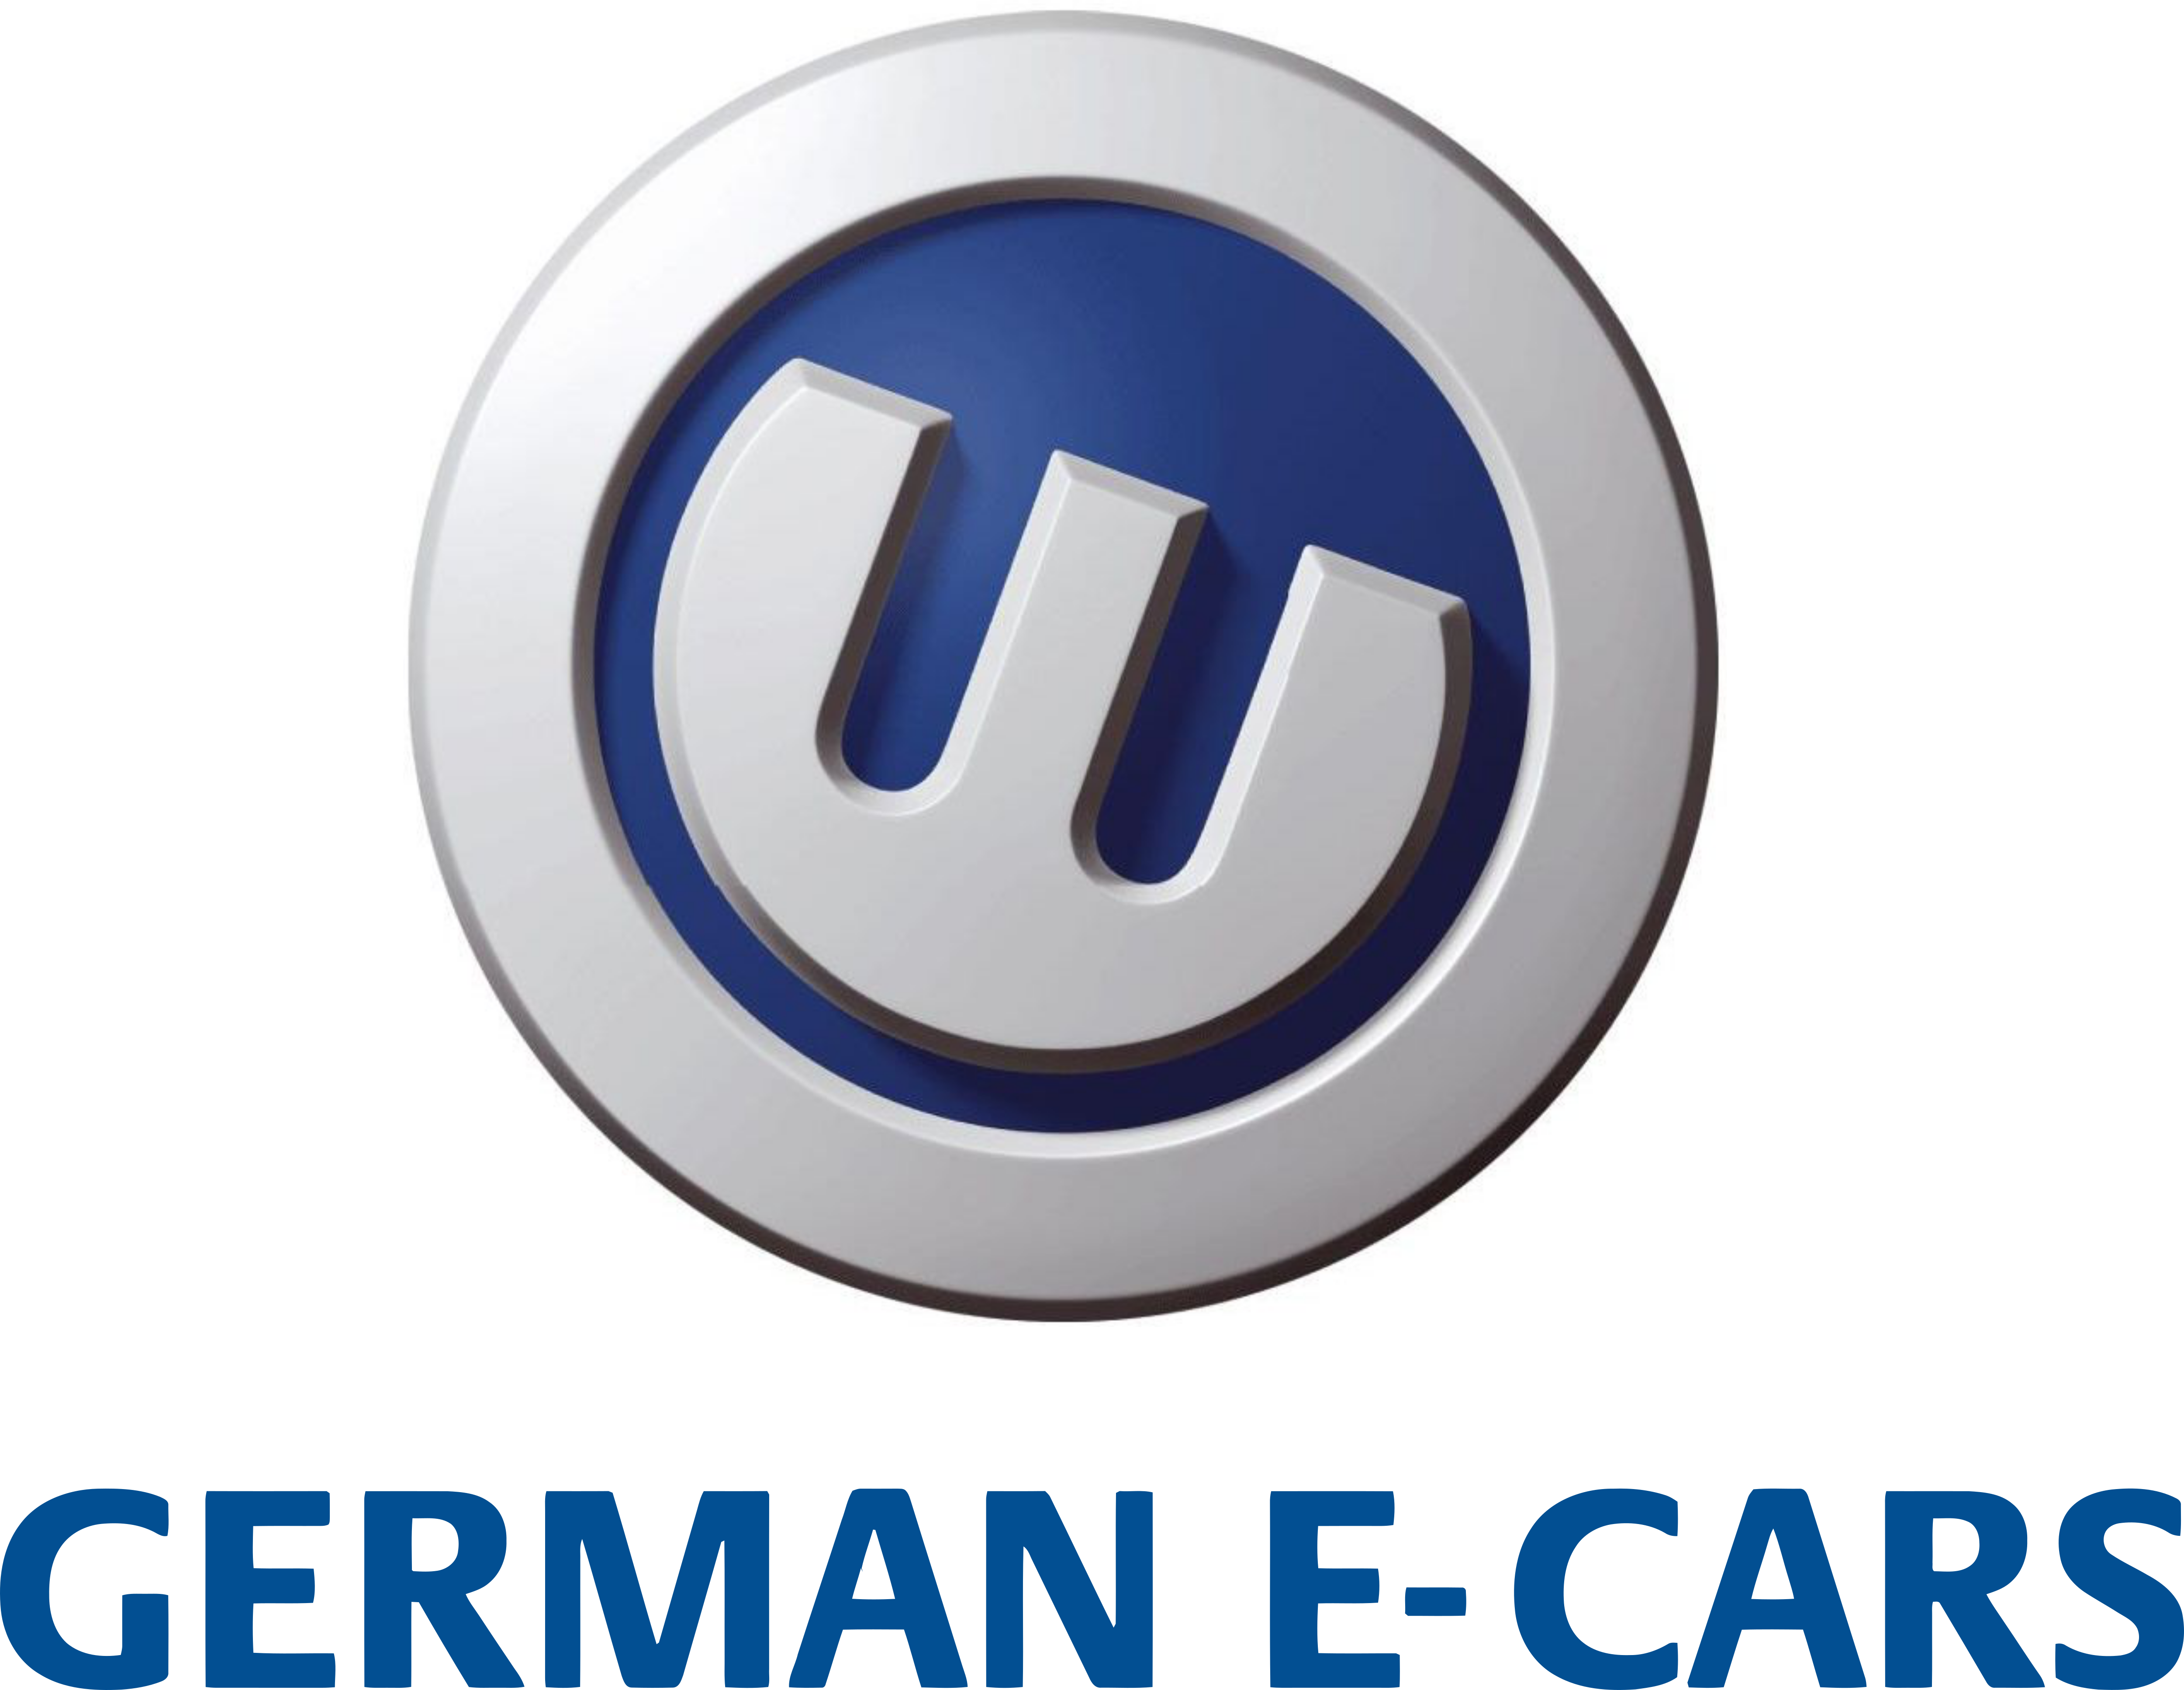 Е карс. German логотип. German cars лого. E-car логотип. Логотипы электромобилей германских.